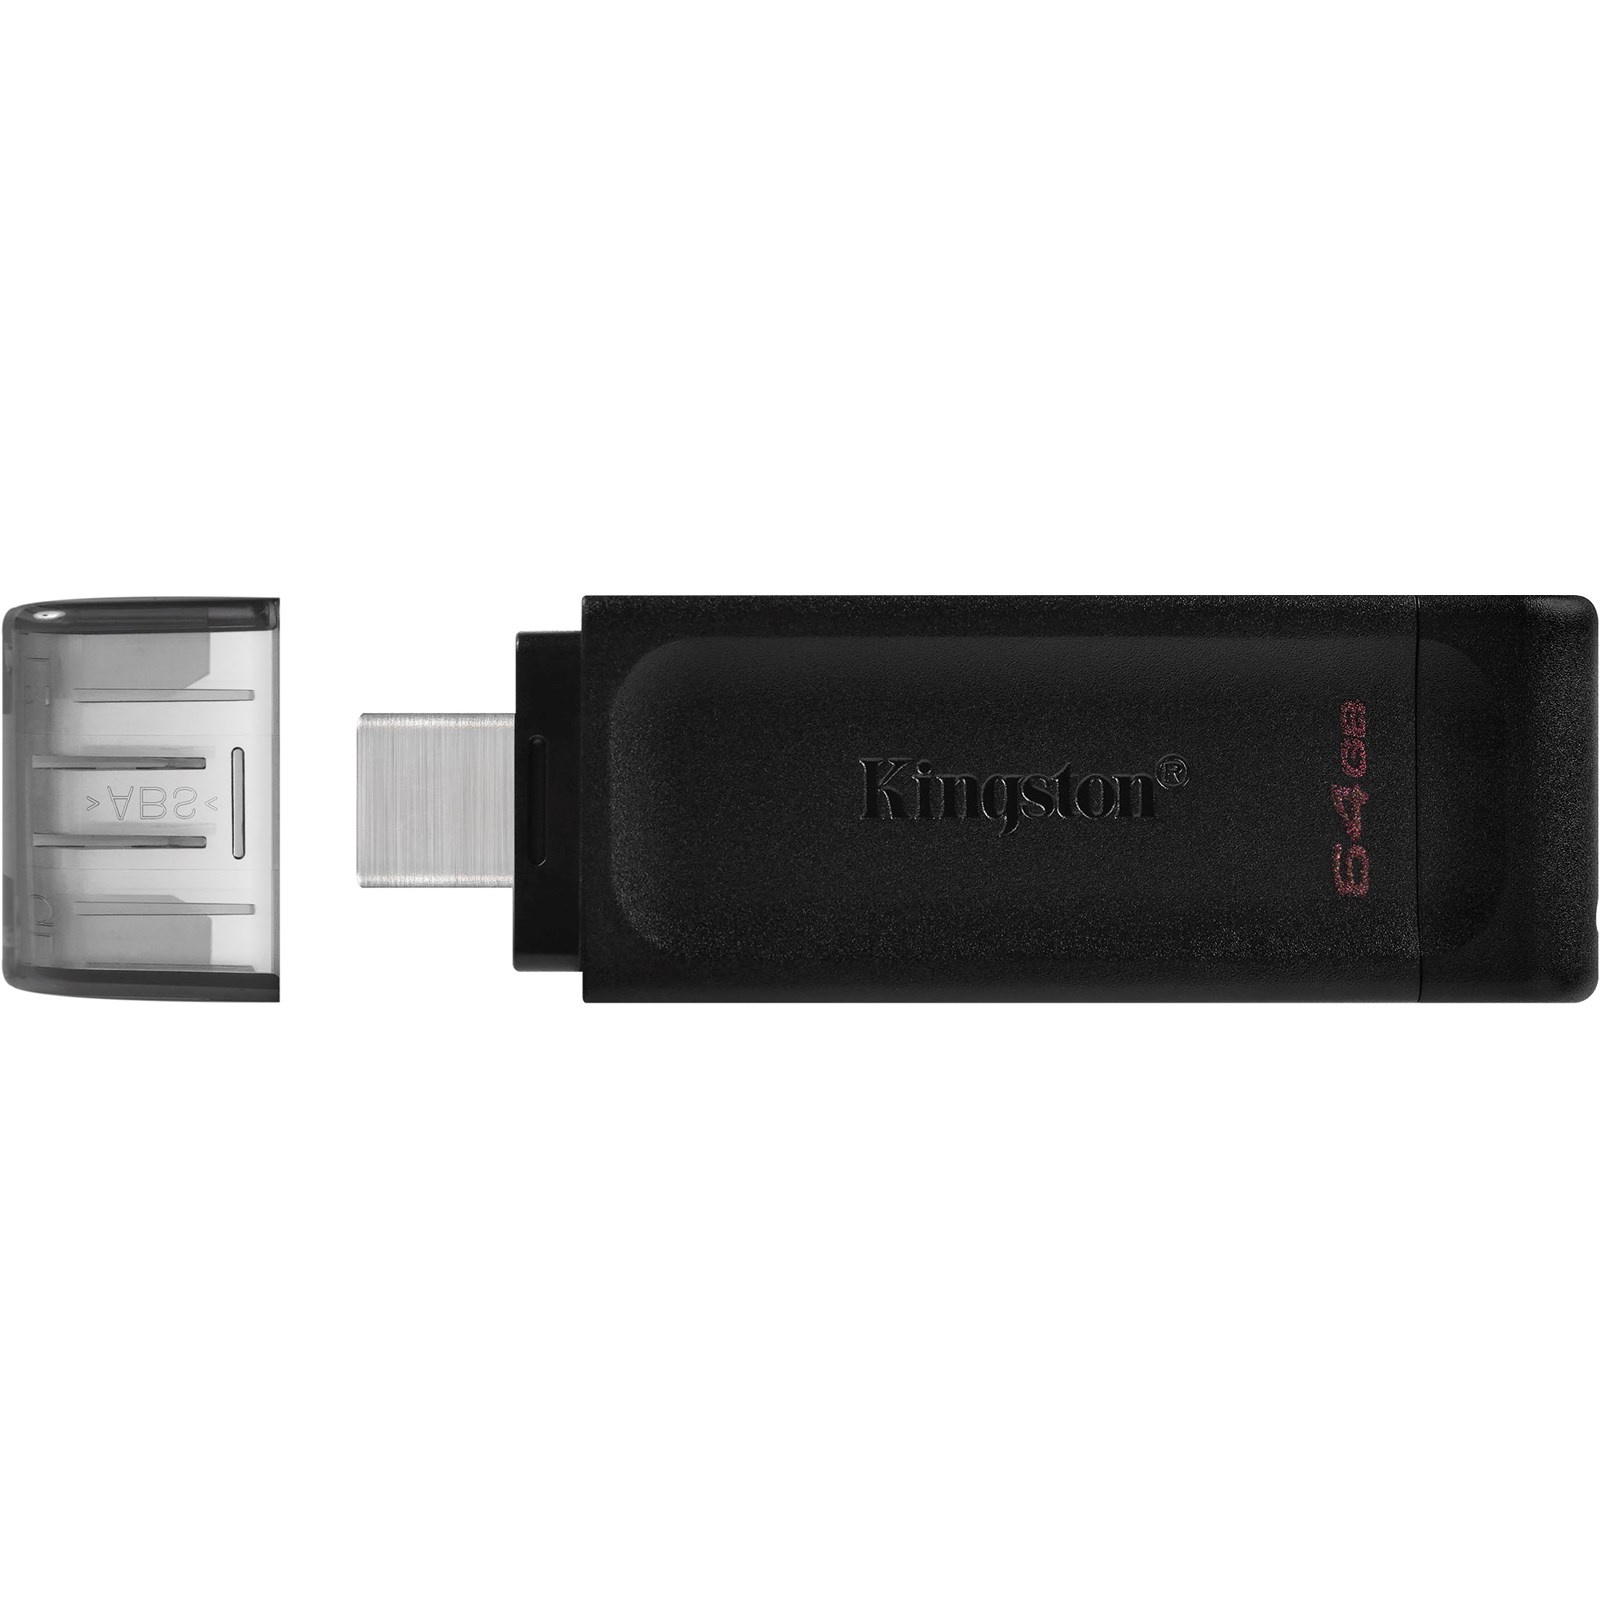 USB-C Flash Drive 64GB Kingston DataTraveler 70 - Albagame